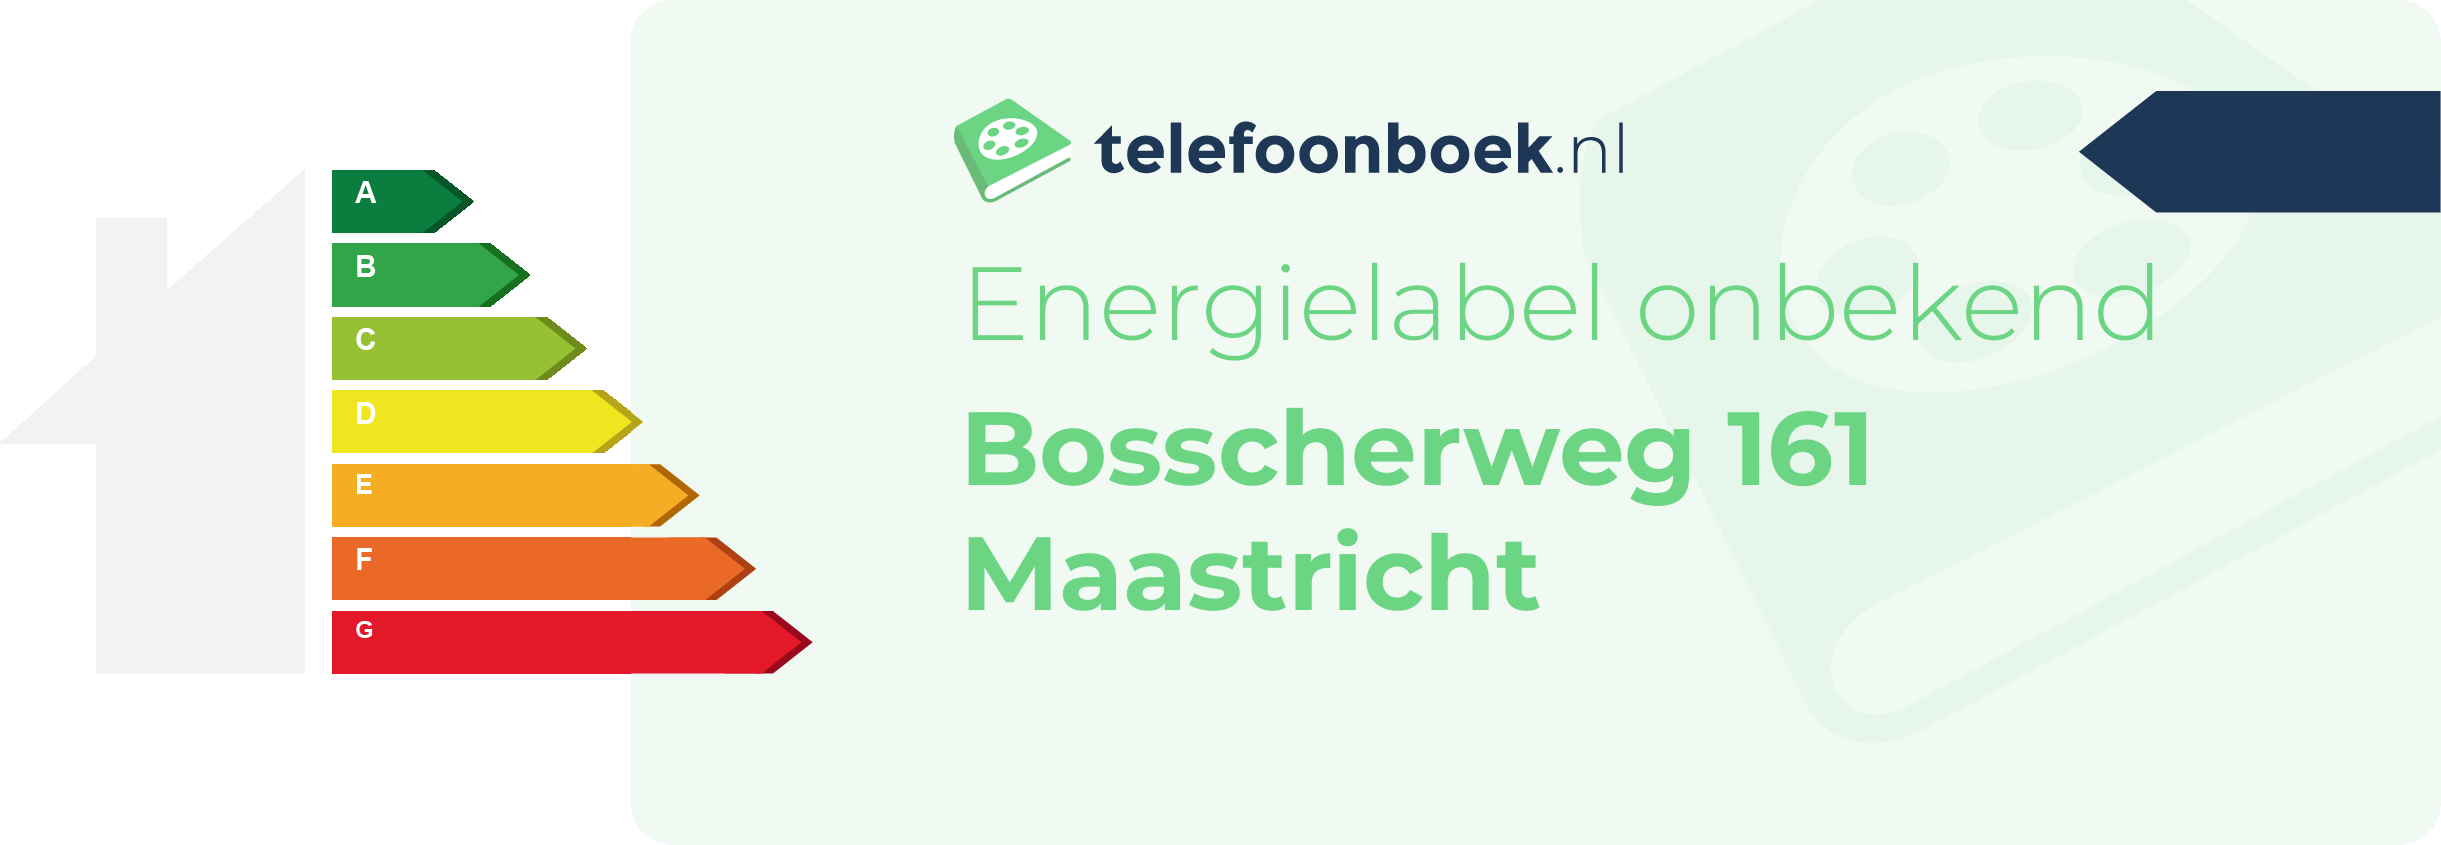 Energielabel Bosscherweg 161 Maastricht